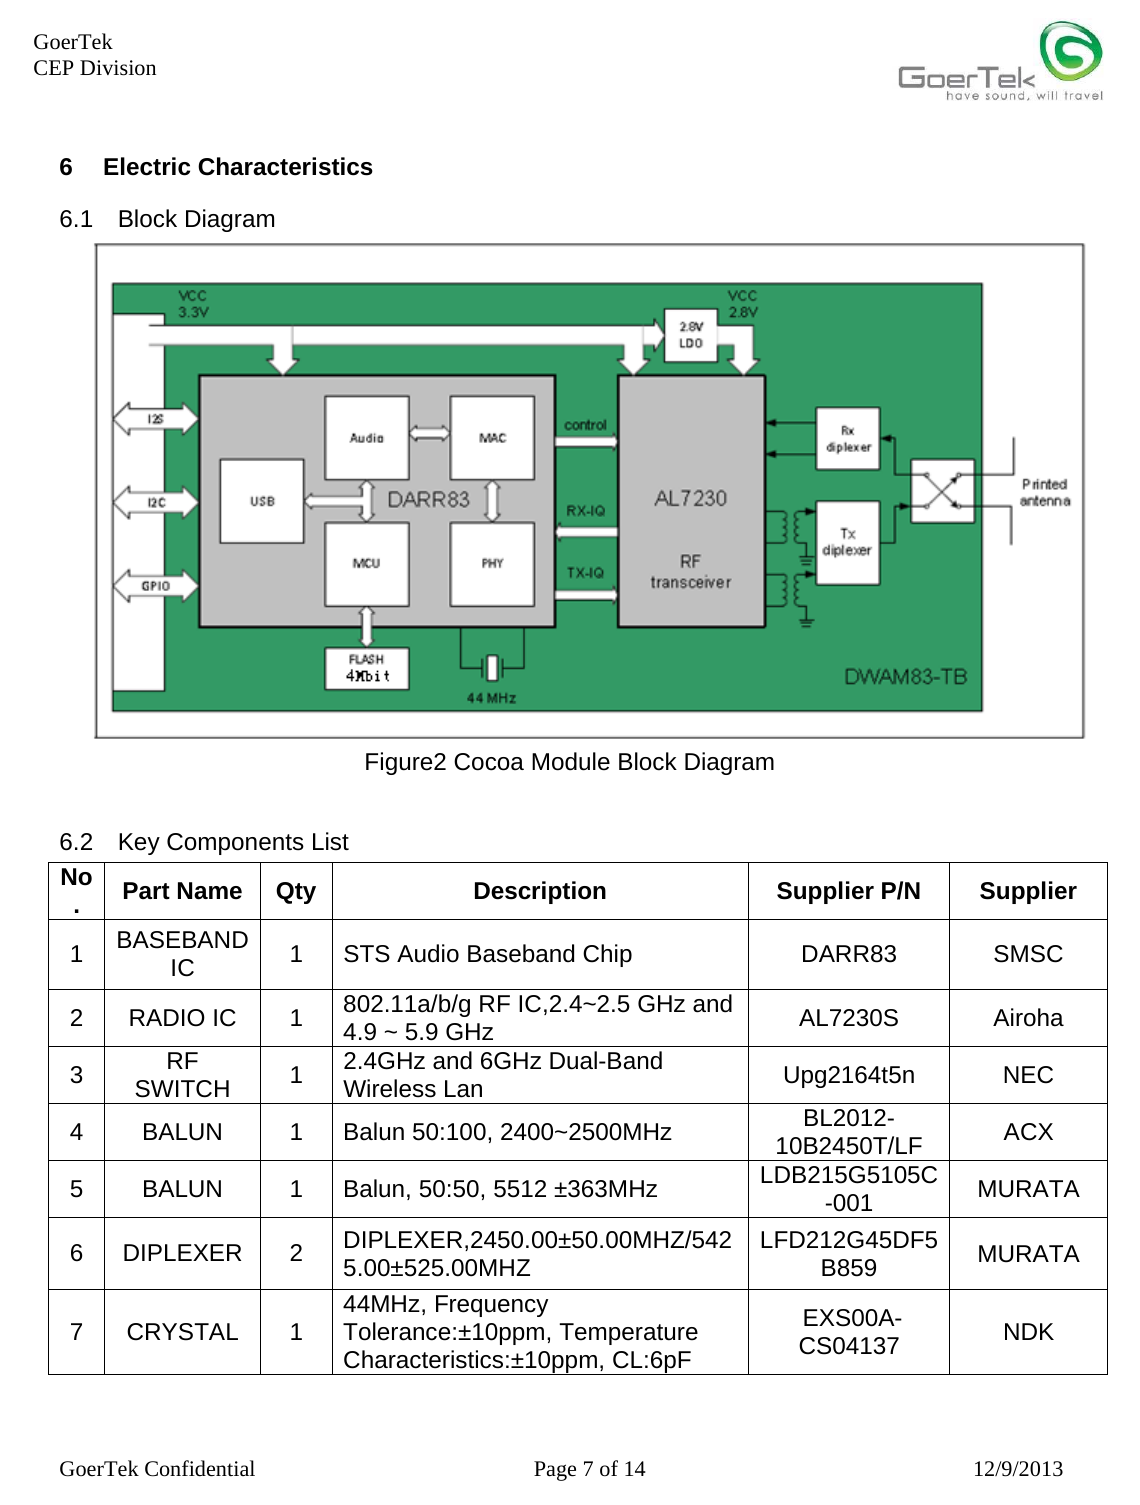     GoerTek Confidential  Page 7 of 14  12/9/2013 GoerTek  CEP Division 6 Electric Characteristics   6.1 Block Diagram  Figure2 Cocoa Module Block Diagram  6.2  Key Components List No.  Part Name  Qty  Description  Supplier P/N  Supplier 1  BASEBAND IC  1  STS Audio Baseband Chip  DARR83  SMSC 2 RADIO IC  1 802.11a/b/g RF IC,2.4~2.5 GHz and 4.9 ~ 5.9 GHz  AL7230S Airoha 3  RF SWITCH  1  2.4GHz and 6GHz Dual-Band Wireless Lan  Upg2164t5n NEC 4  BALUN  1  Balun 50:100, 2400~2500MHz  BL2012-10B2450T/LF  ACX 5  BALUN  1  Balun, 50:50, 5512 ±363MHz  LDB215G5105C-001  MURATA 6 DIPLEXER  2 DIPLEXER,2450.00±50.00MHZ/5425.00±525.00MHZ  LFD212G45DF5B859  MURATA 7 CRYSTAL  1 44MHz, Frequency Tolerance:±10ppm, Temperature Characteristics:±10ppm, CL:6pF  EXS00A-CS04137  NDK 